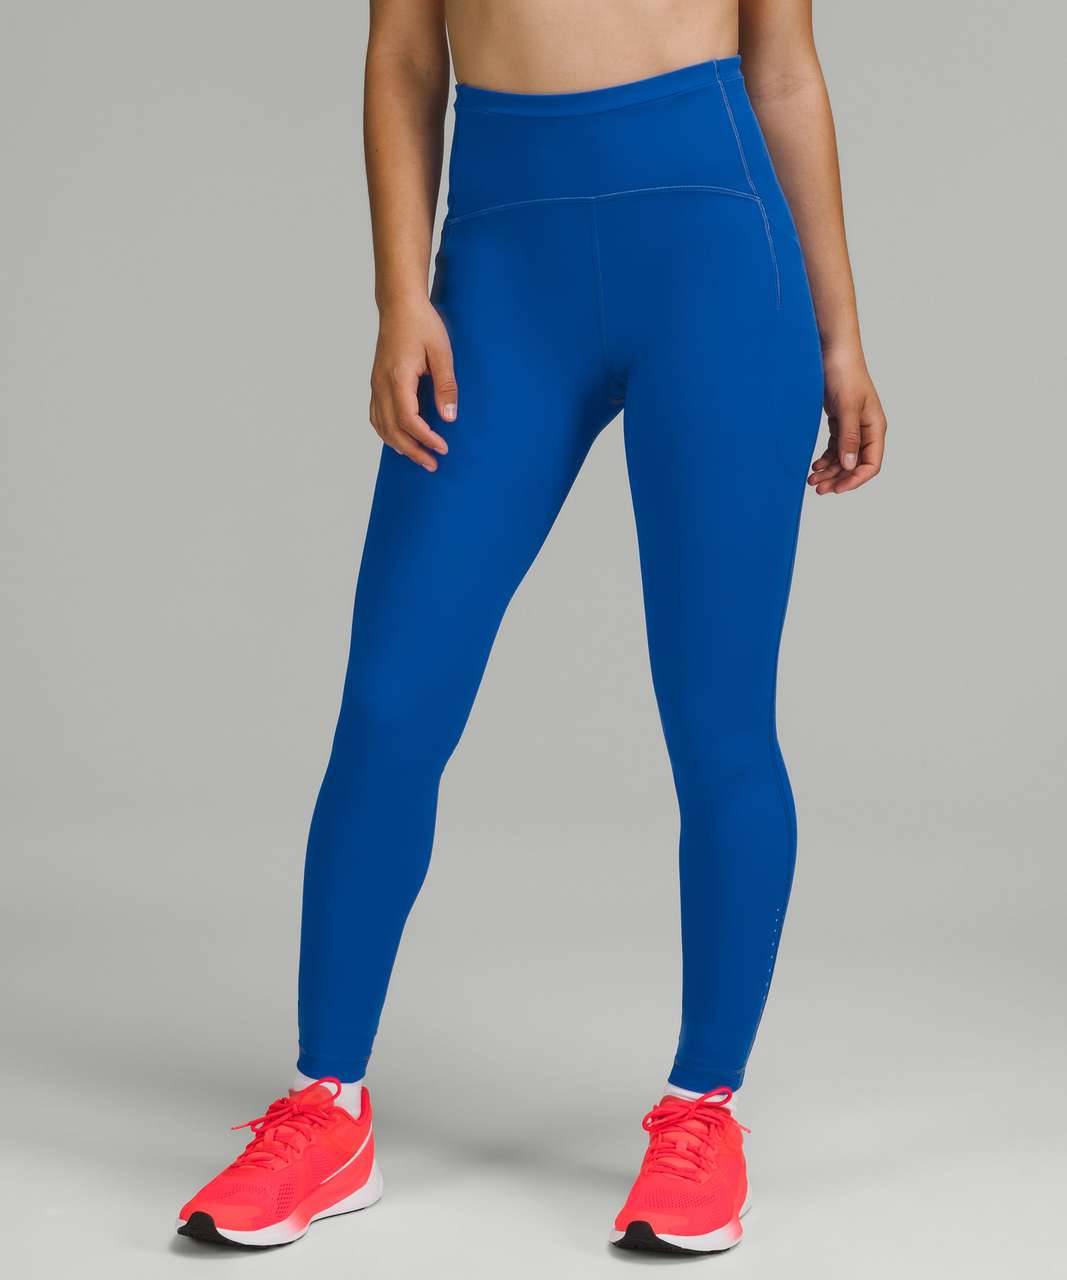 NWT LULULEMON SWIFT SPEED 28” TIGHT BLUE LEOPARD REFLECTIVE sz 6 - Athletic  apparel